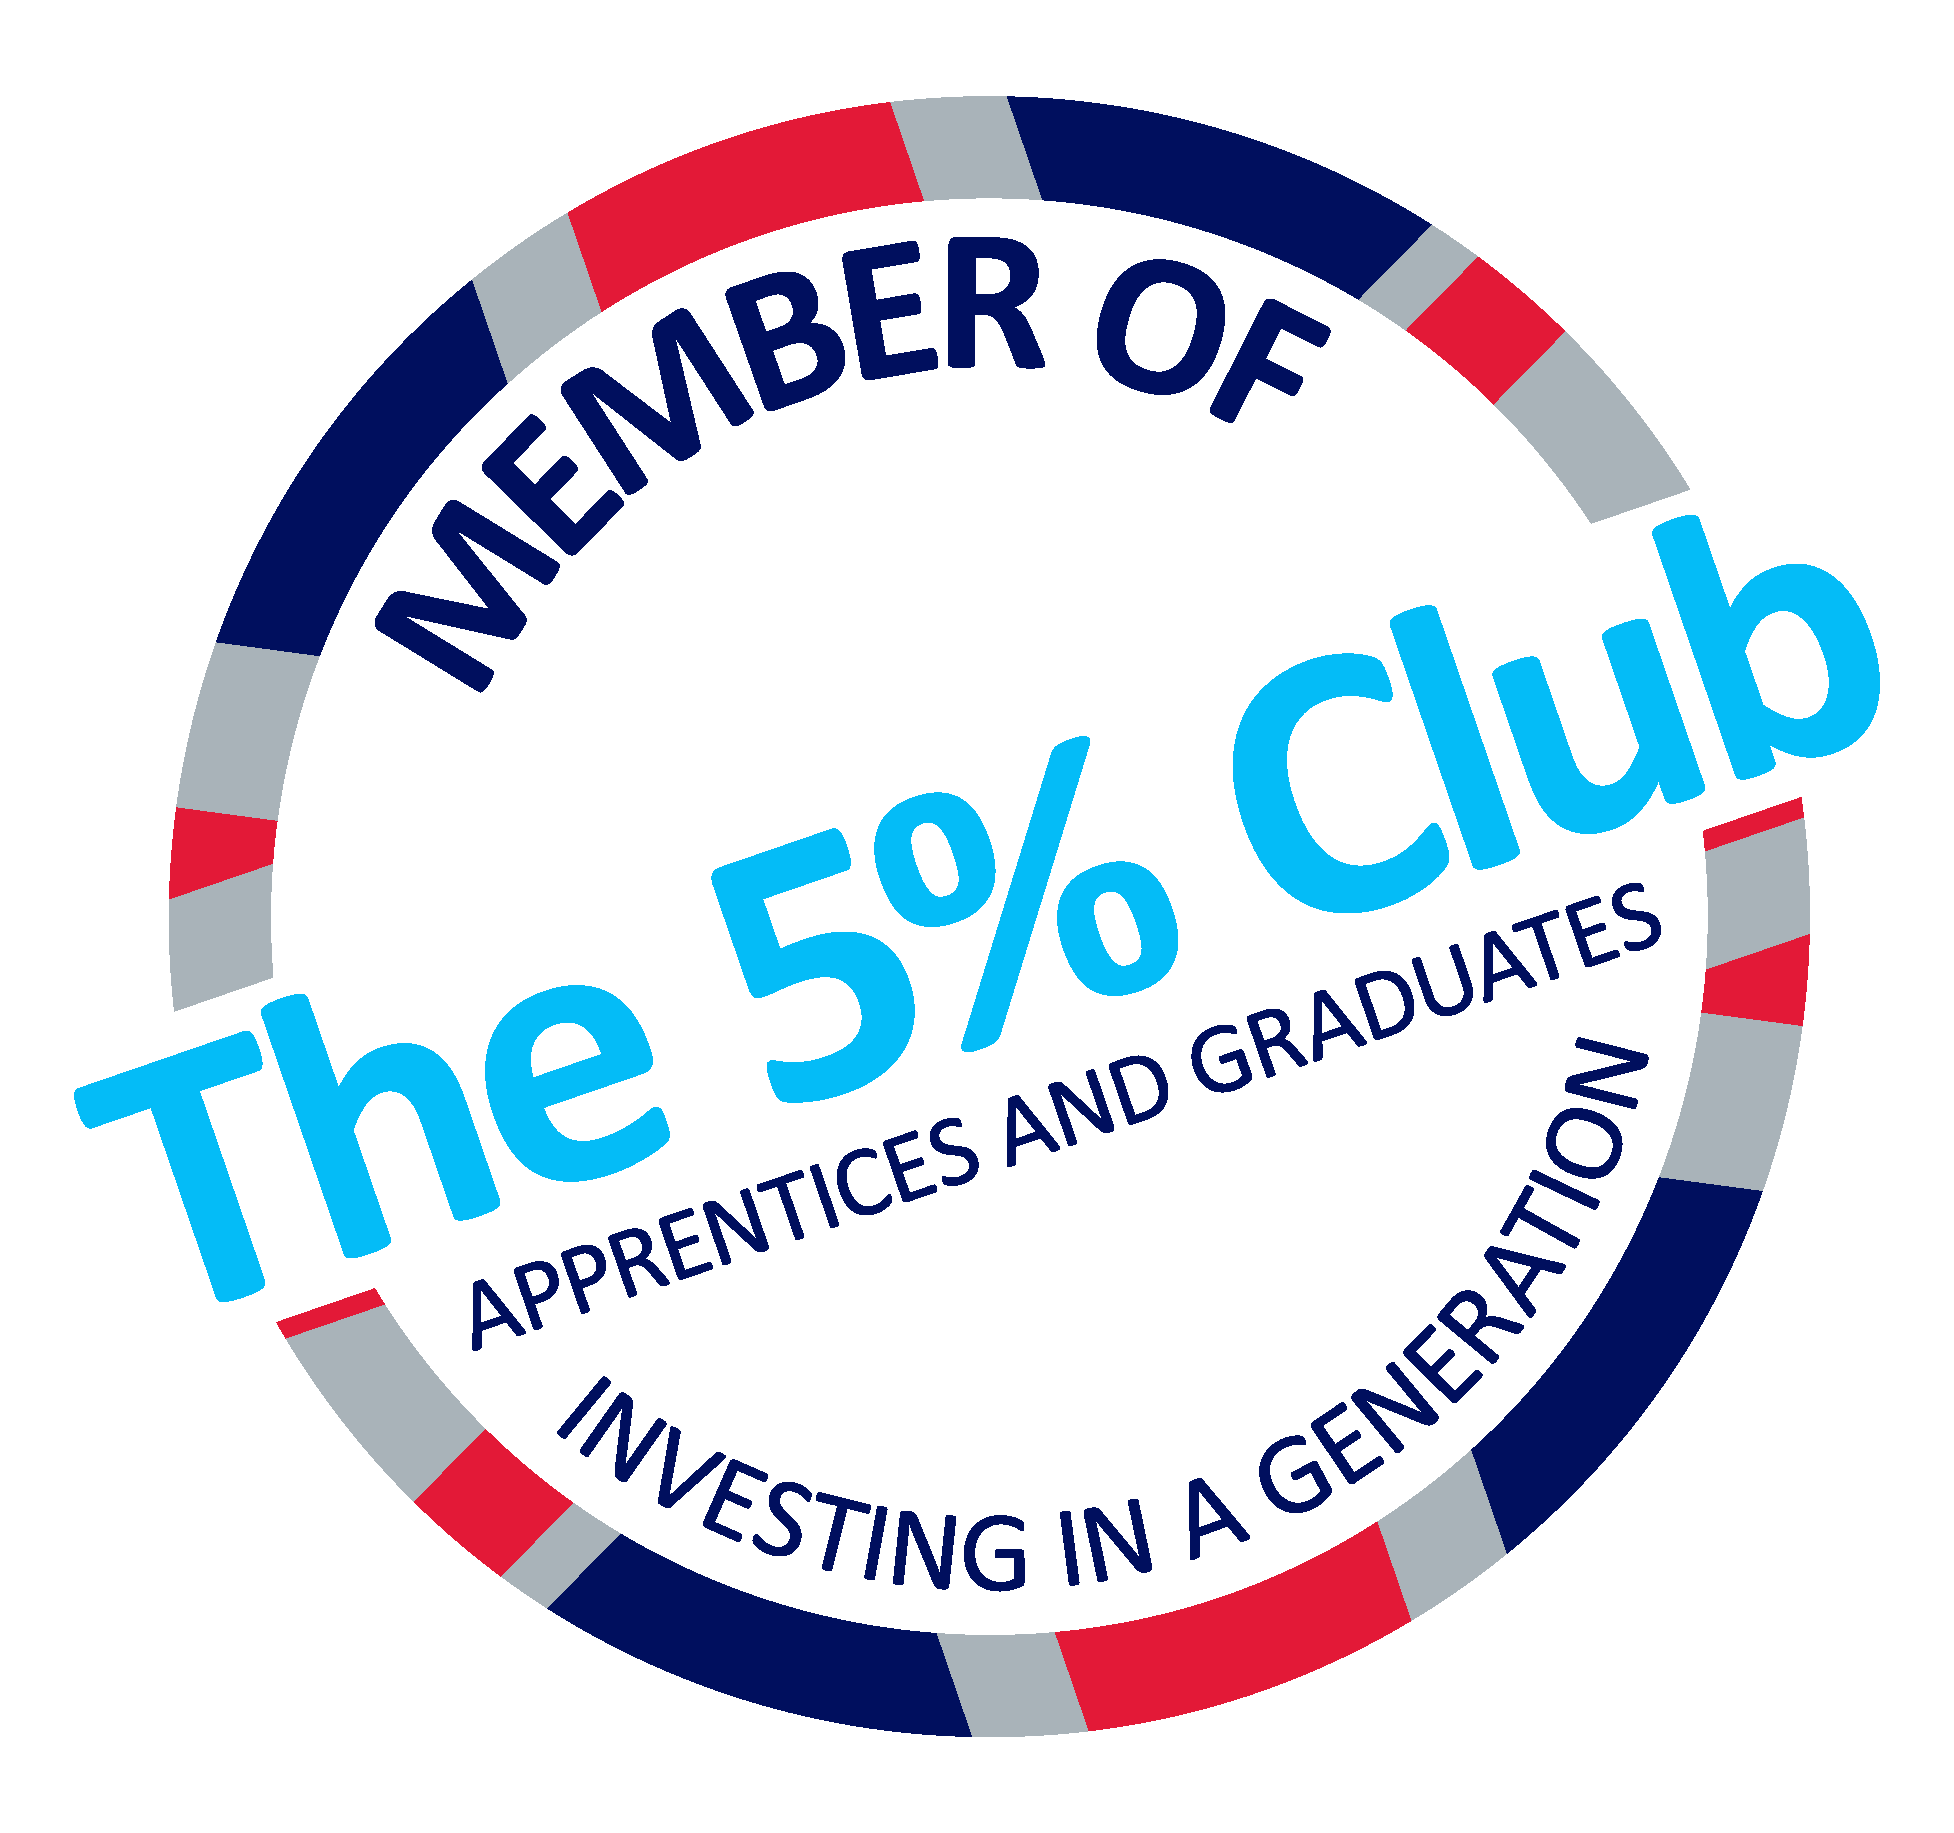 Member of The 5% Club